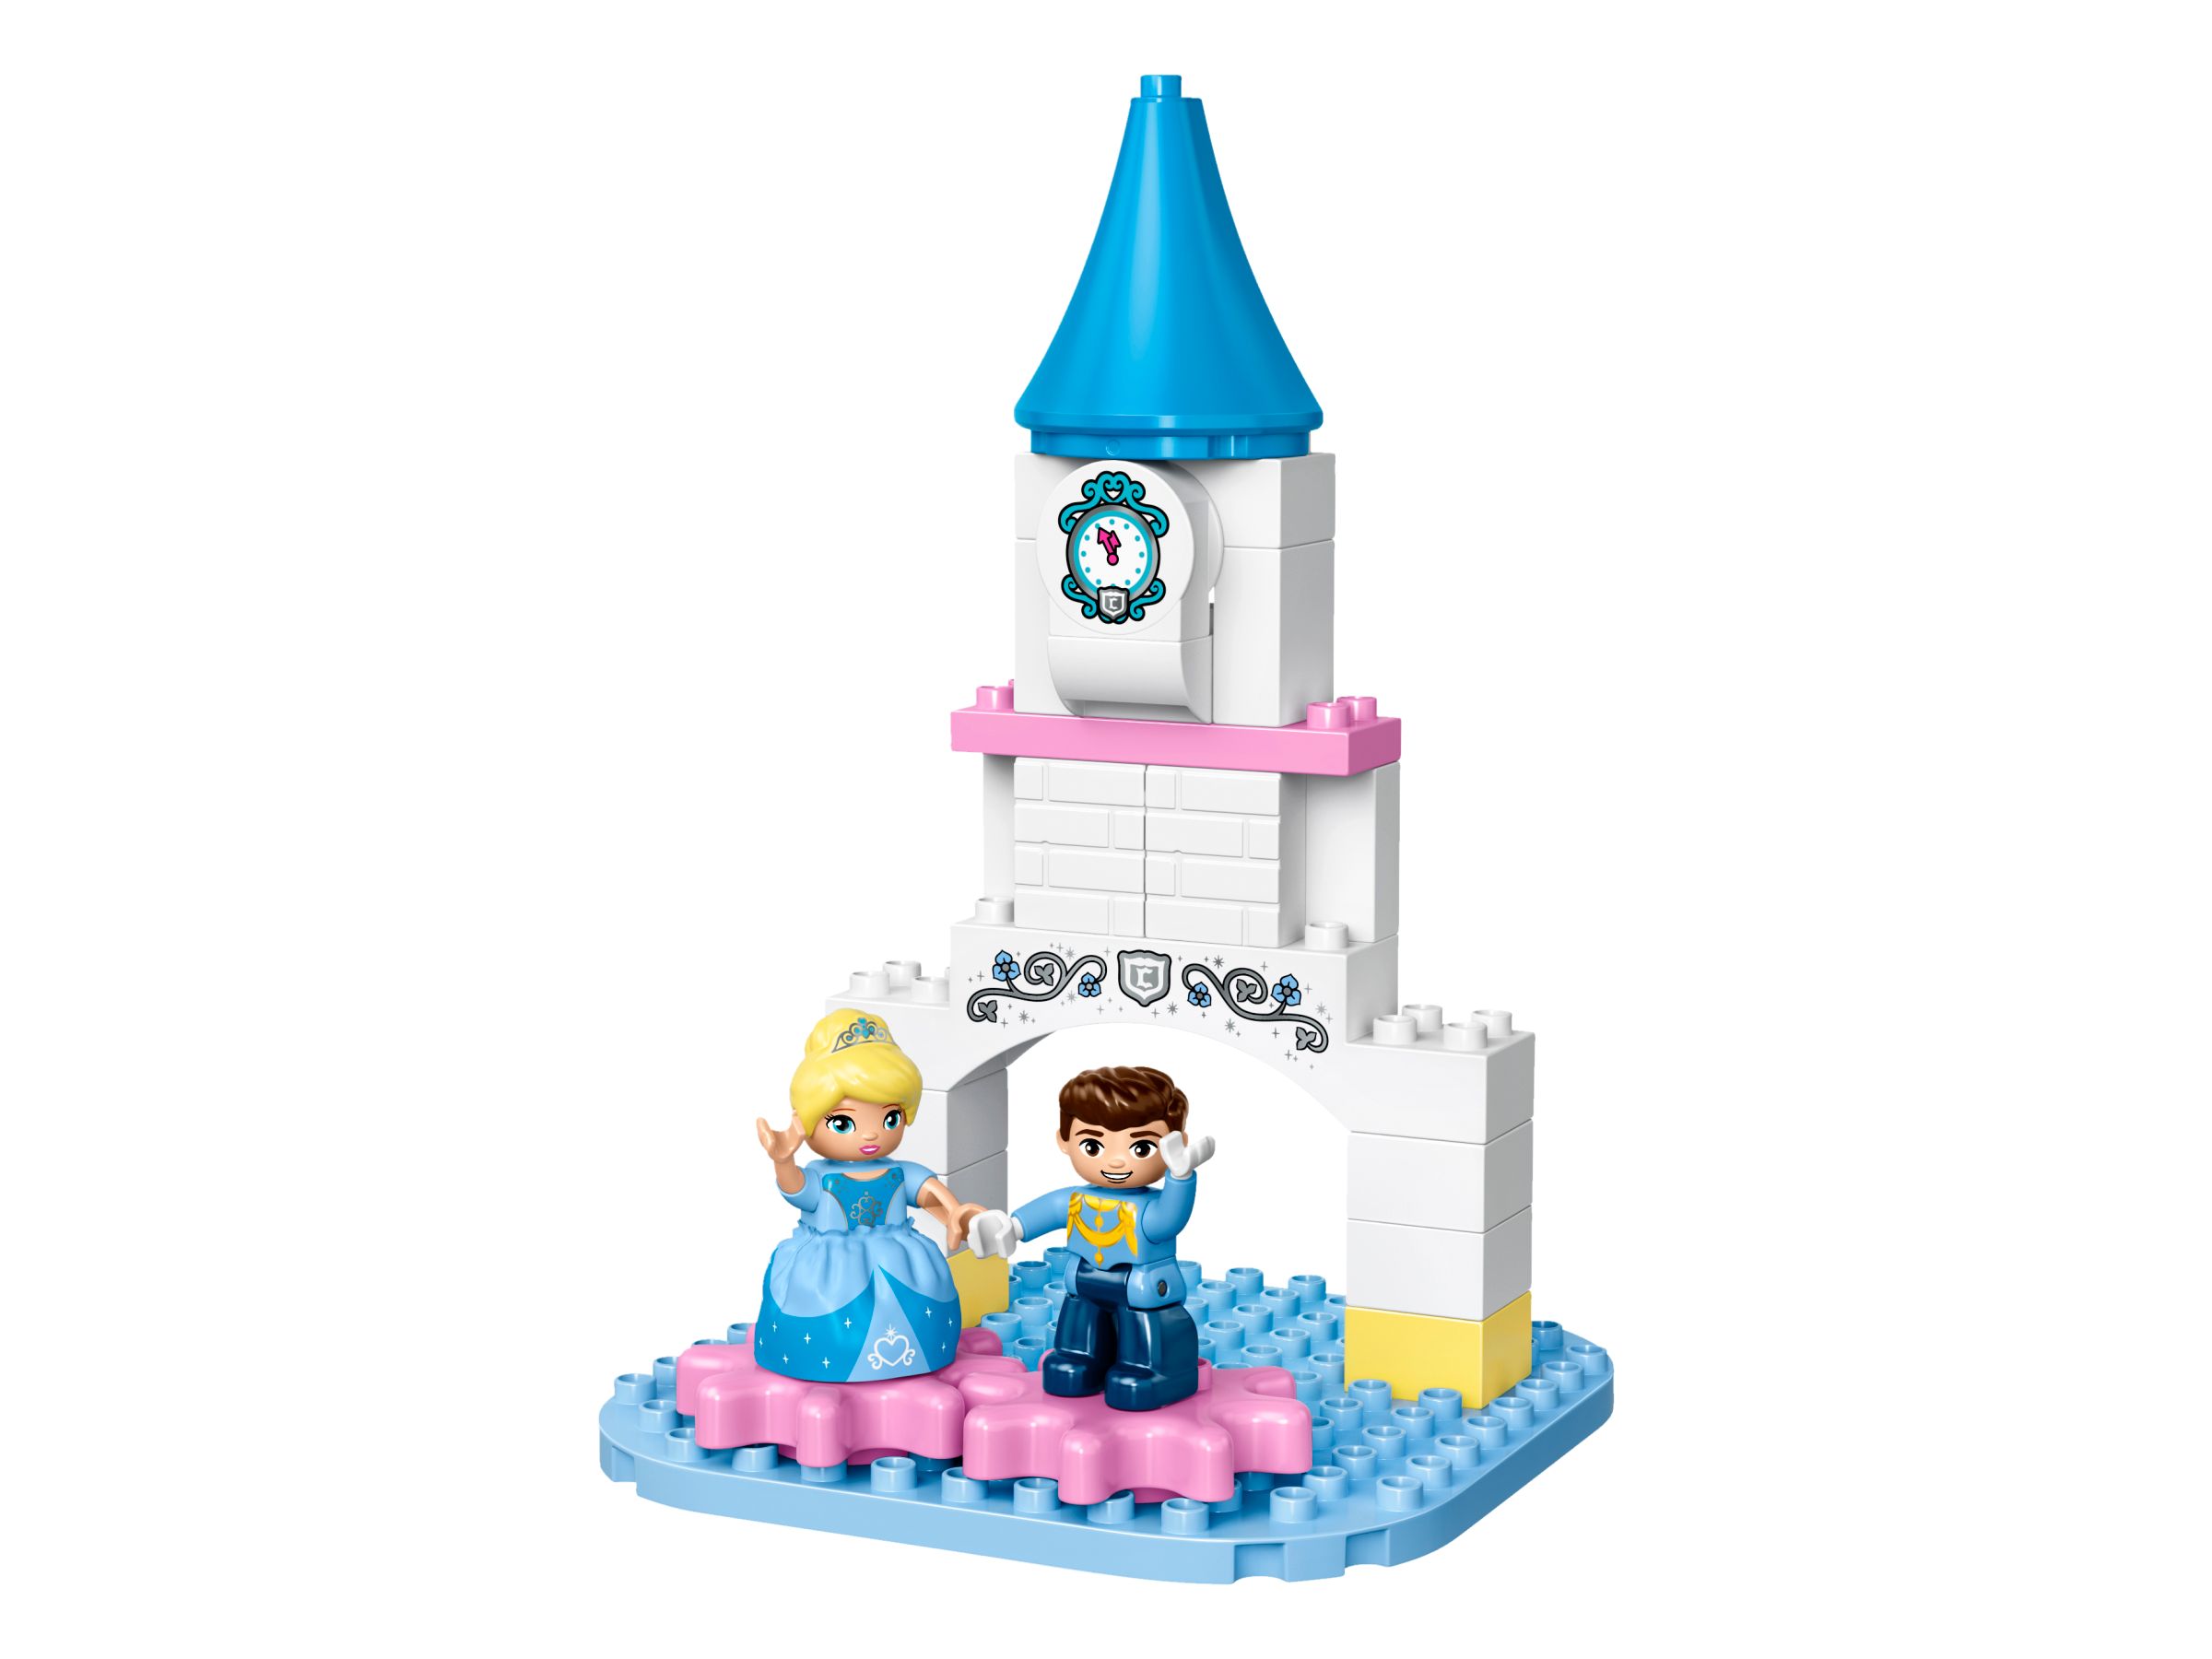 LEGO Duplo 10855 Cinderellas Märchenschloss LEGO_10855_alt3.jpg